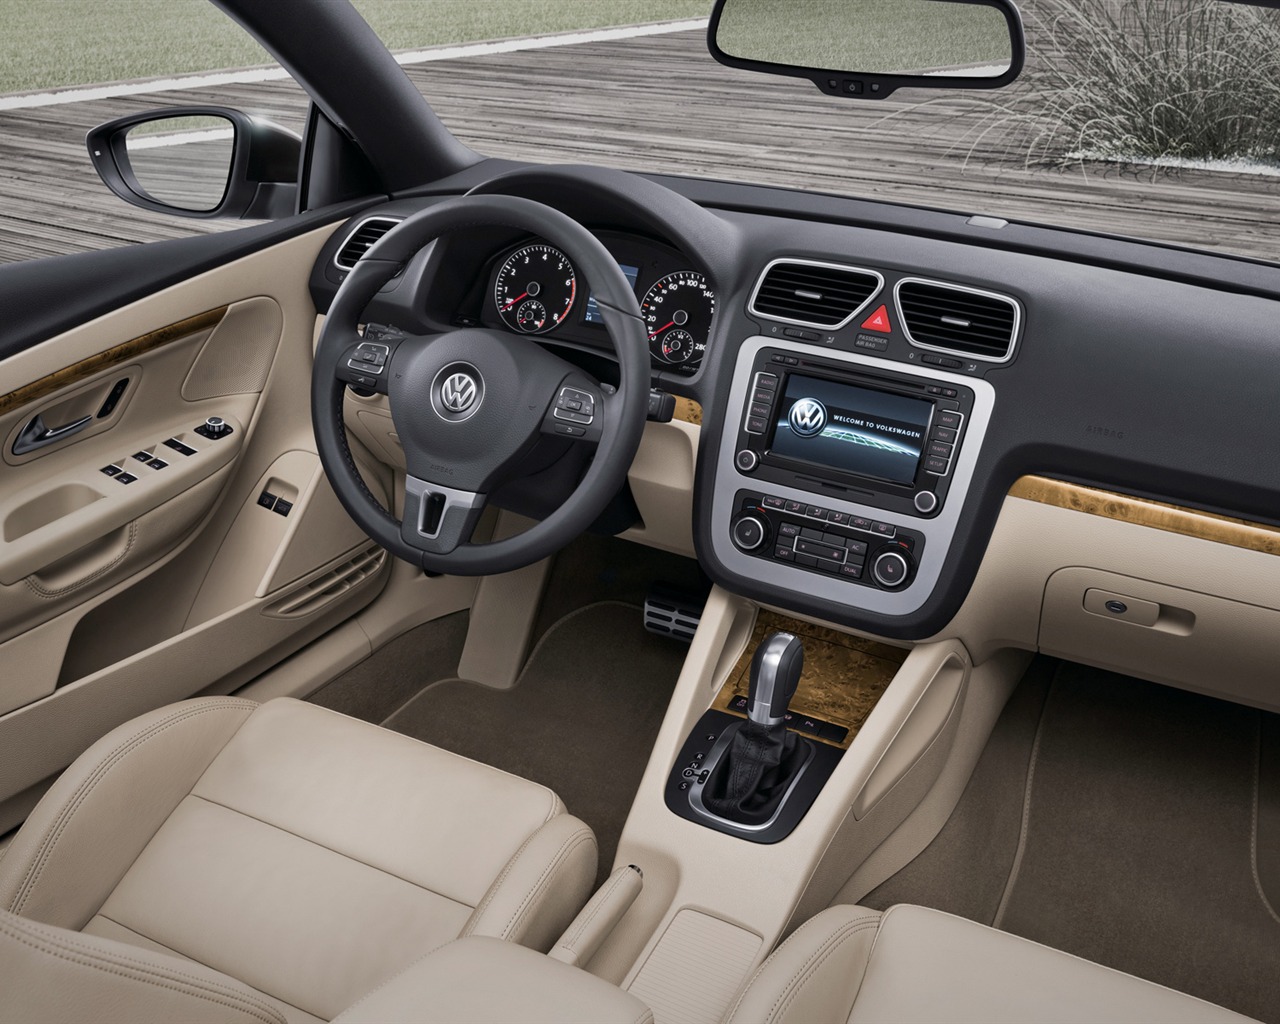 Volkswagen Eos - 2011 大眾 #15 - 1280x1024